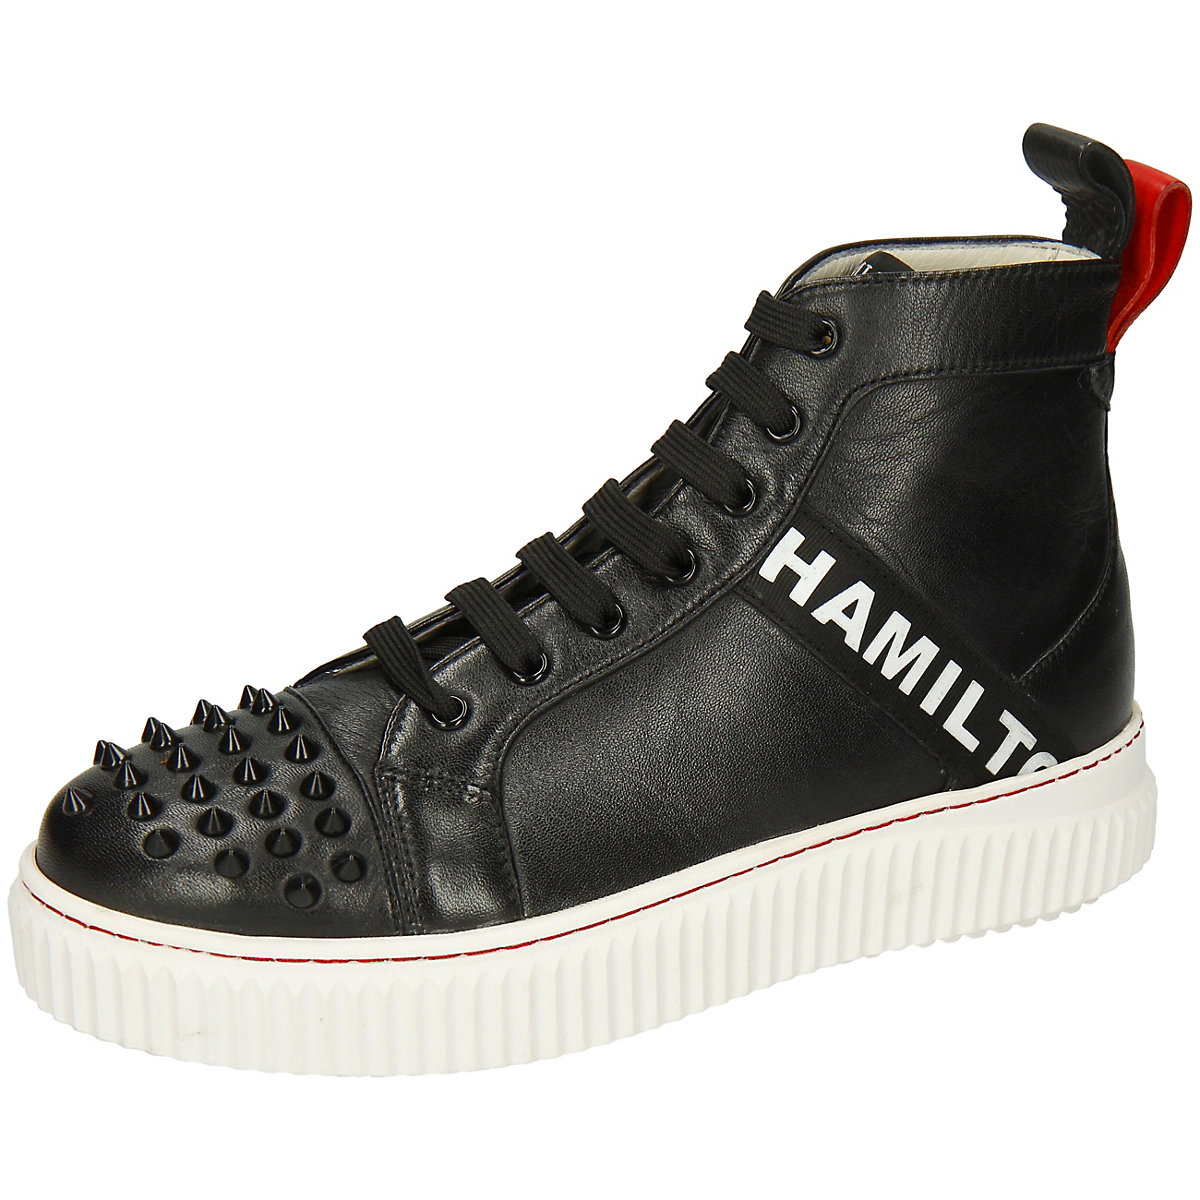 MELVIN & HAMILTON Nuri 2 Sneakers Sneakers Low schwarz